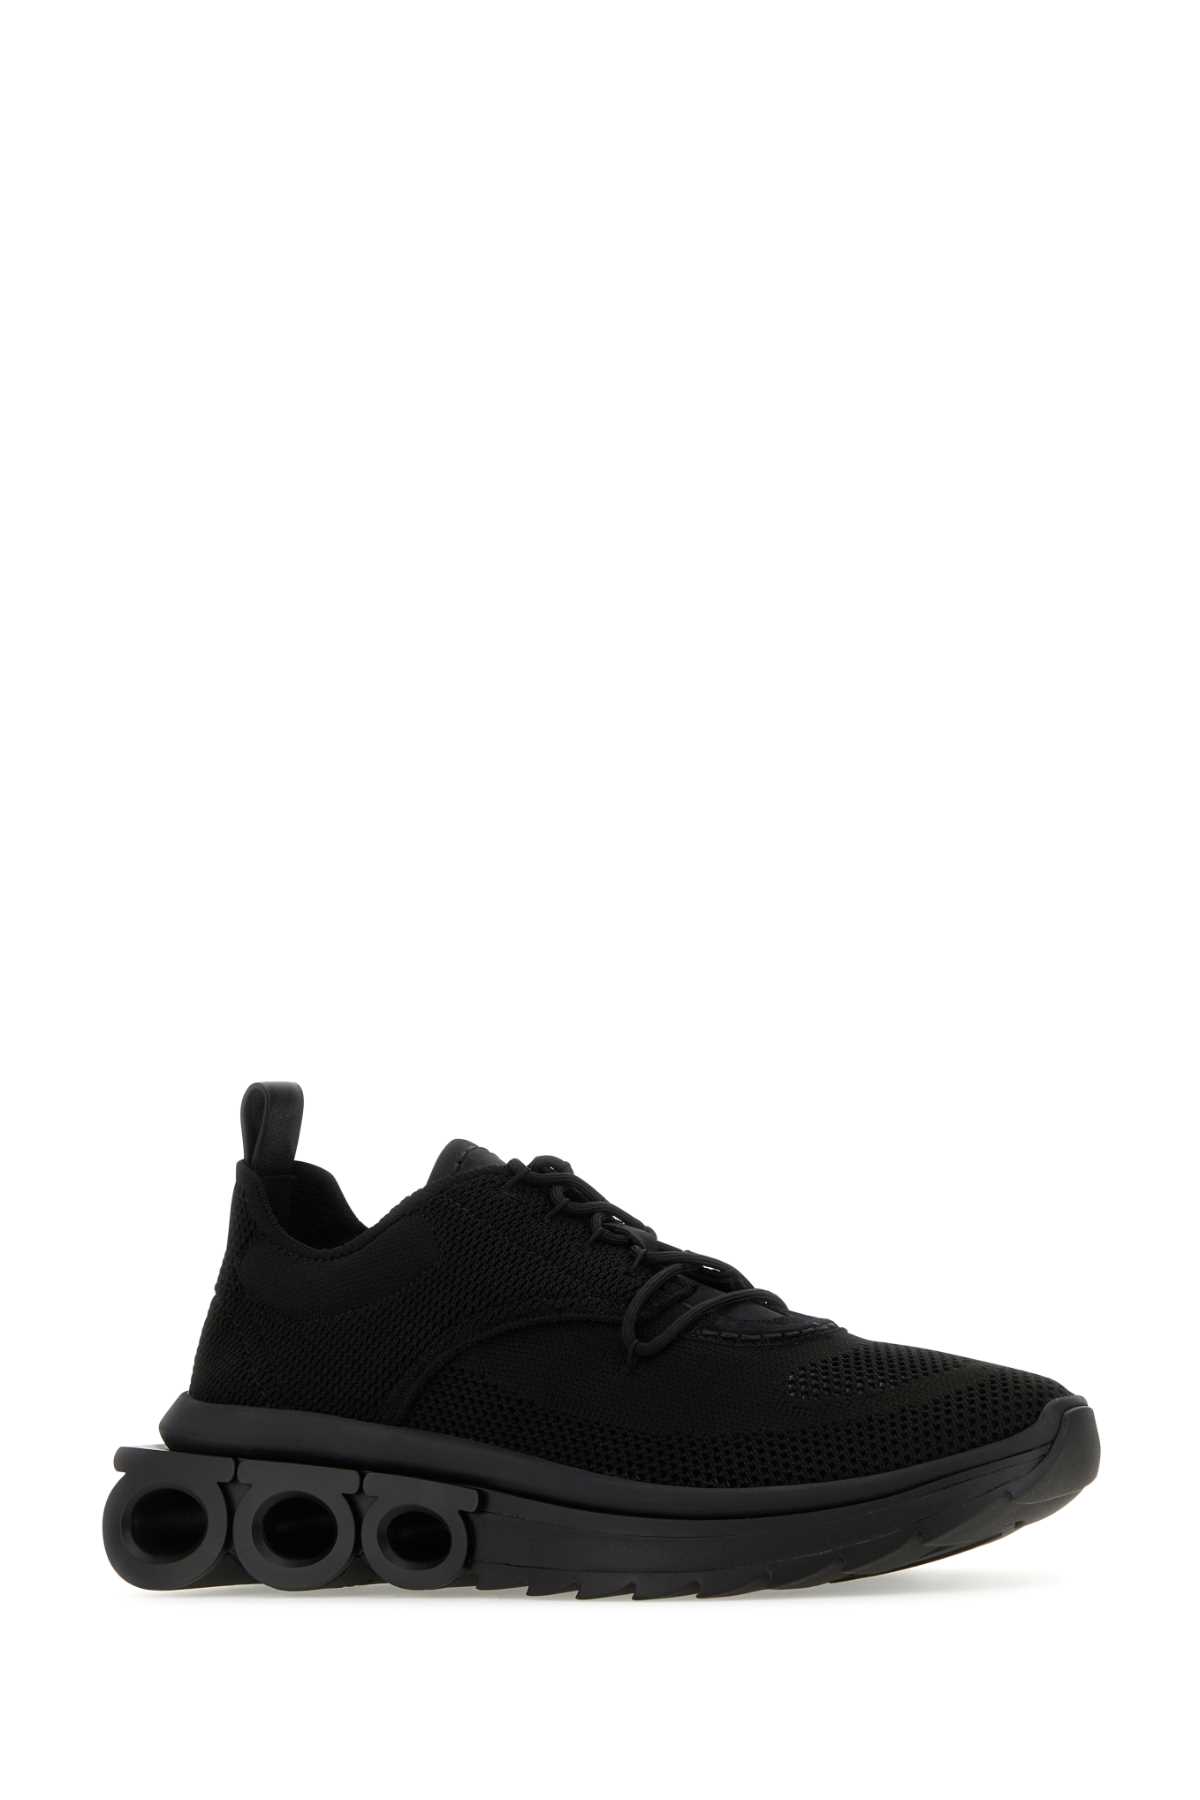 Ferragamo Black Tech Knit Nima Sneakers In Carbone